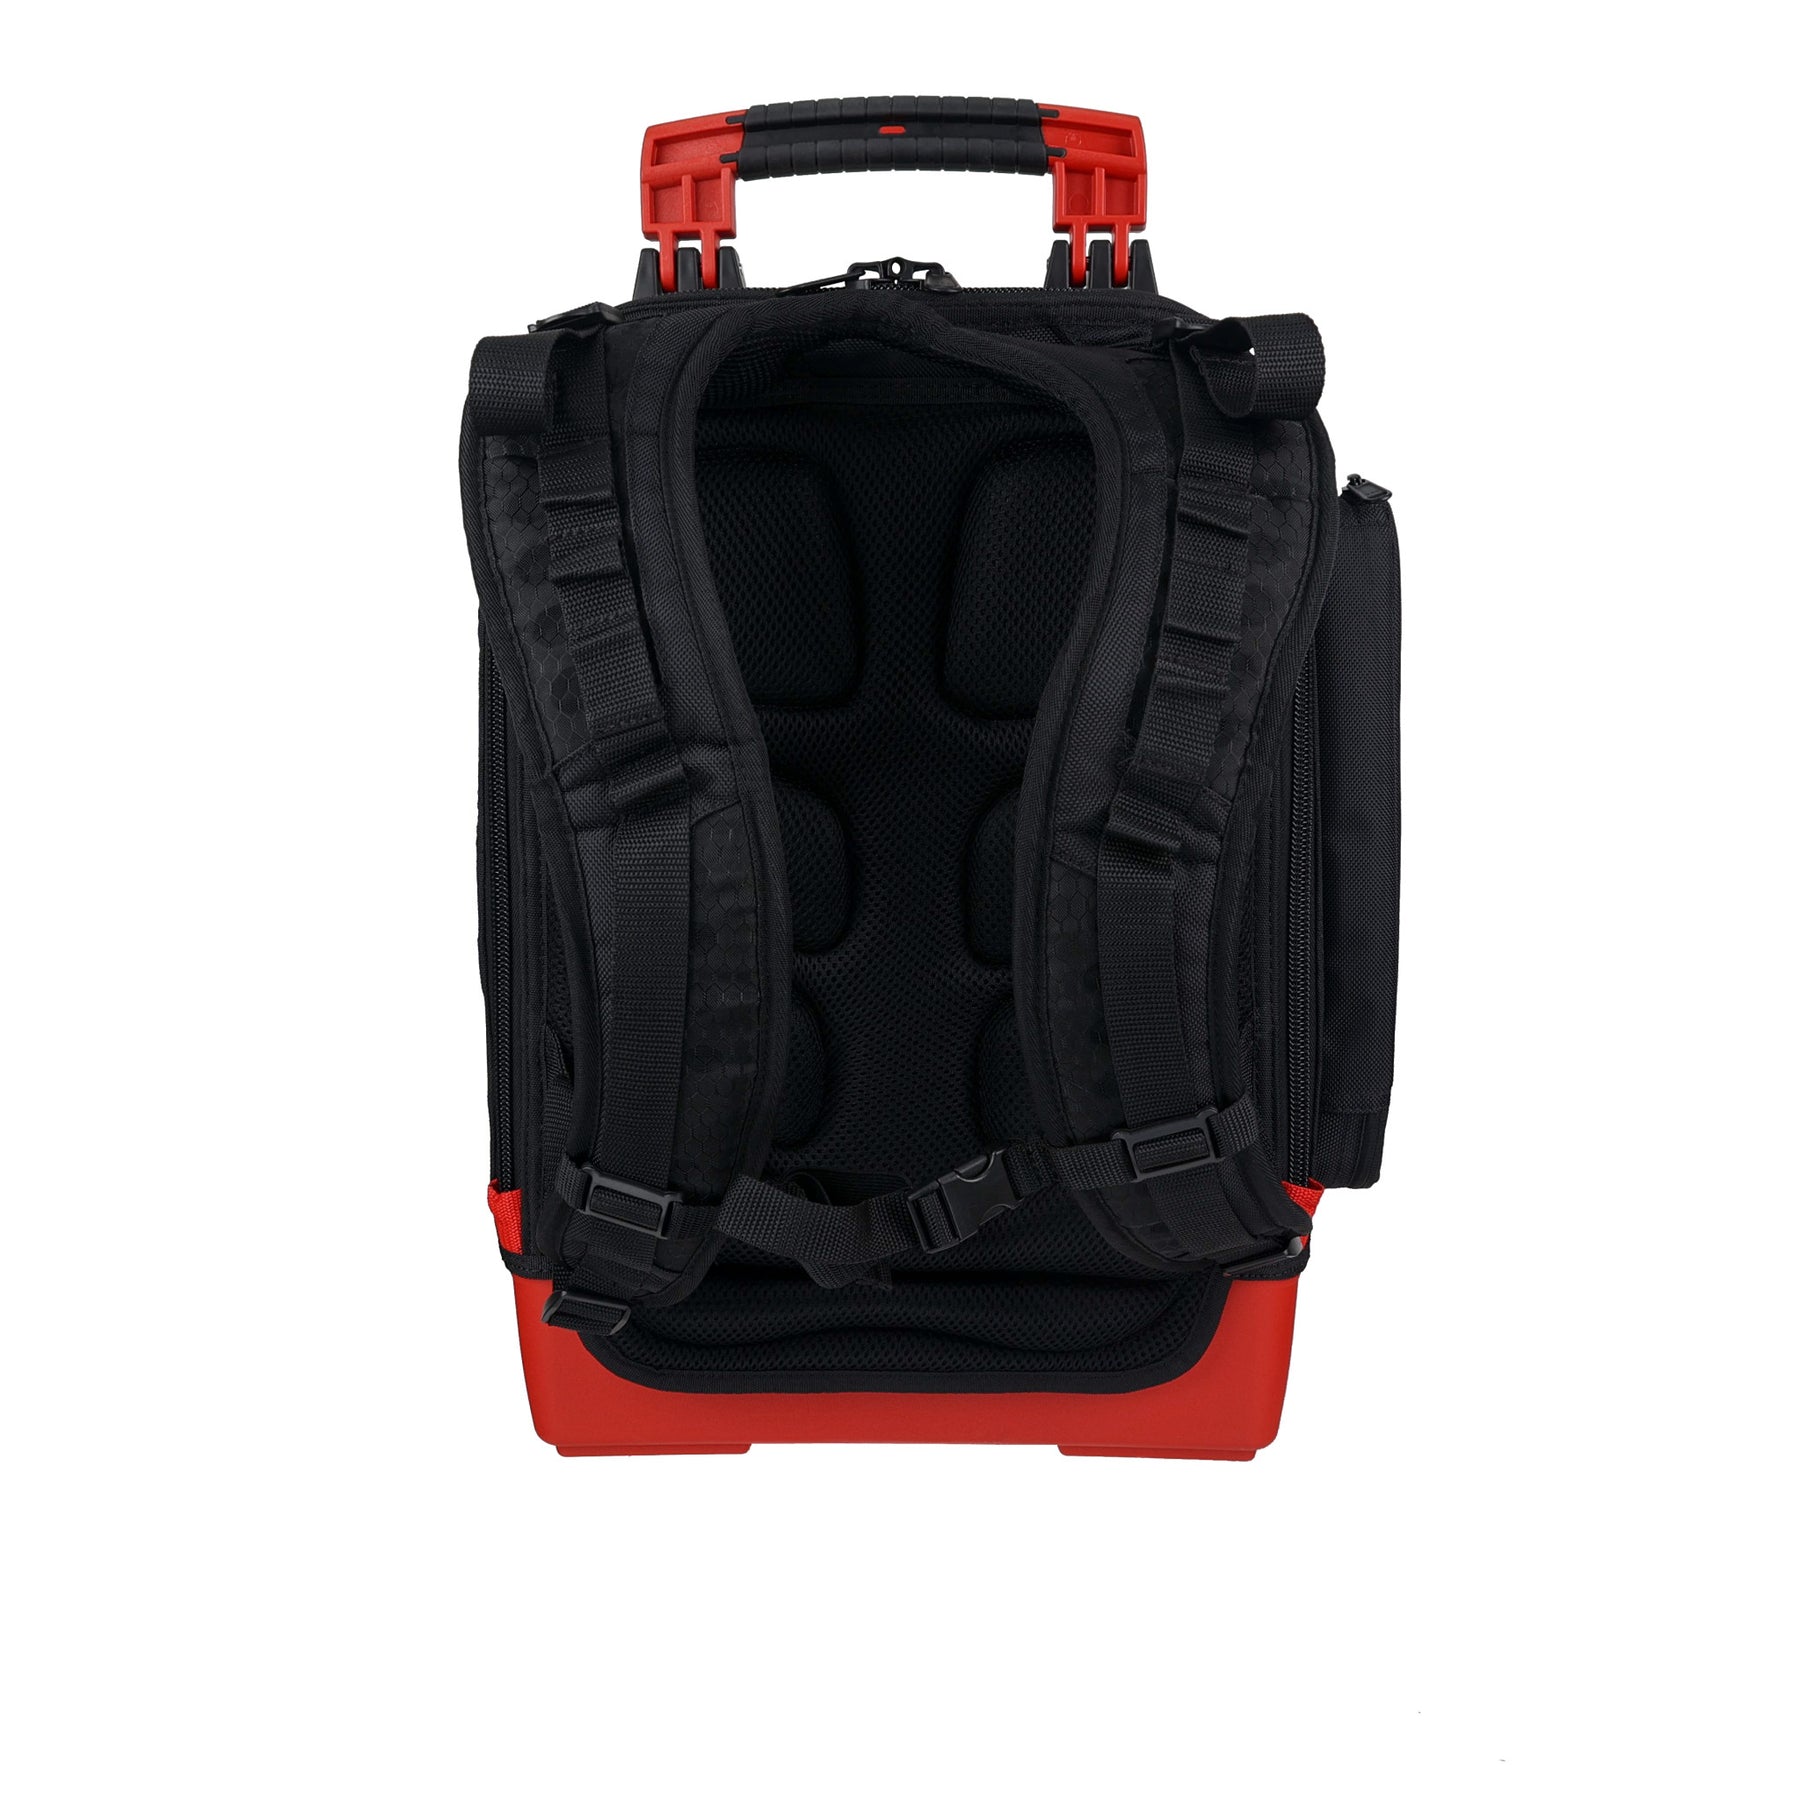 Wiha 91869 Heavy Duty Tool Hauler Backpack